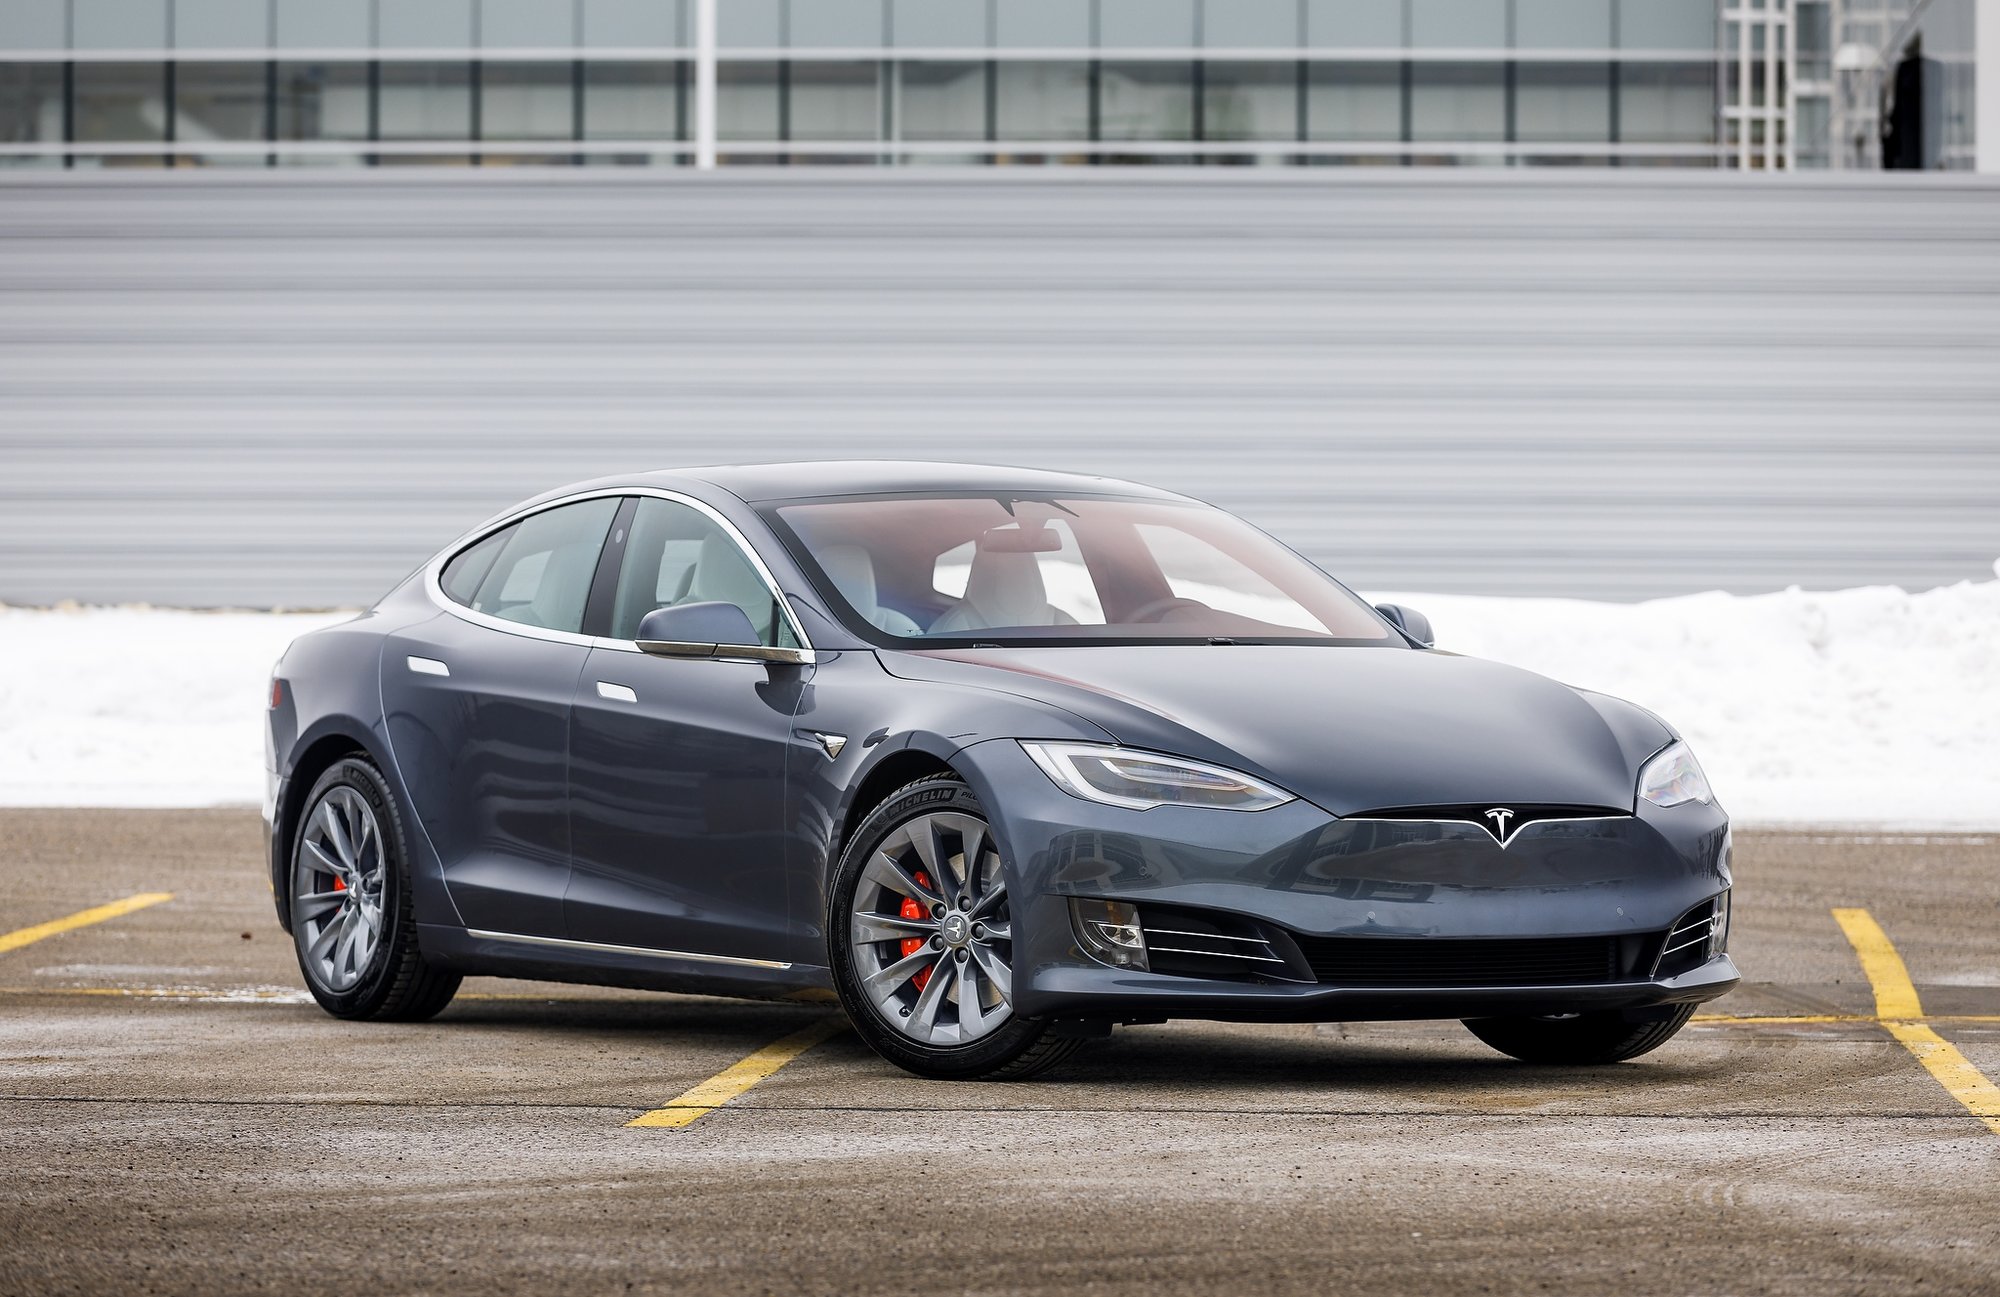 20191207 Tesla Model S BP 0012-Edit FACEBOOK.jpg